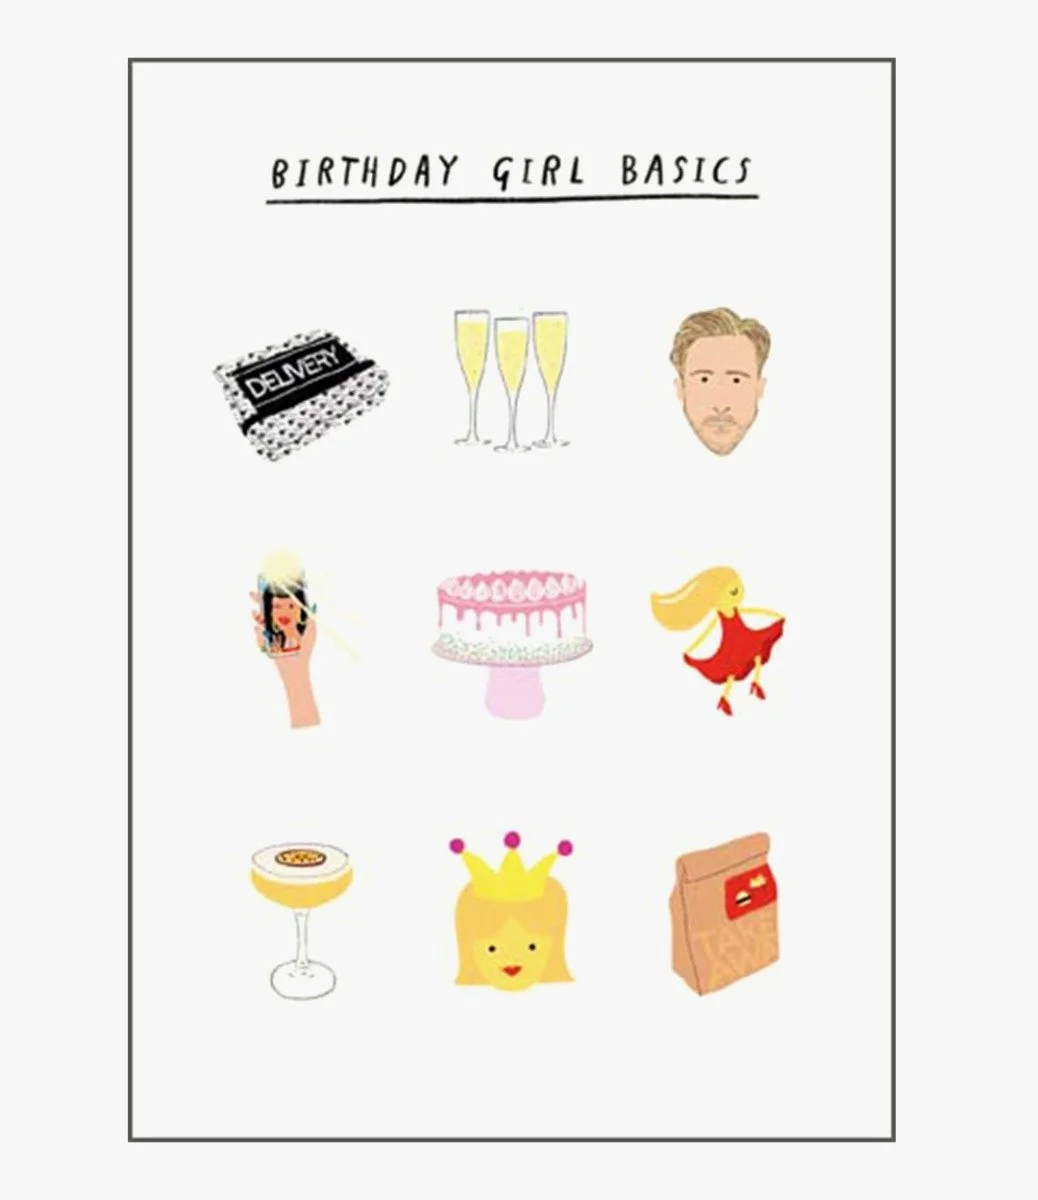 Birthday Girl Basics Greeting Card by 20th Century Icons